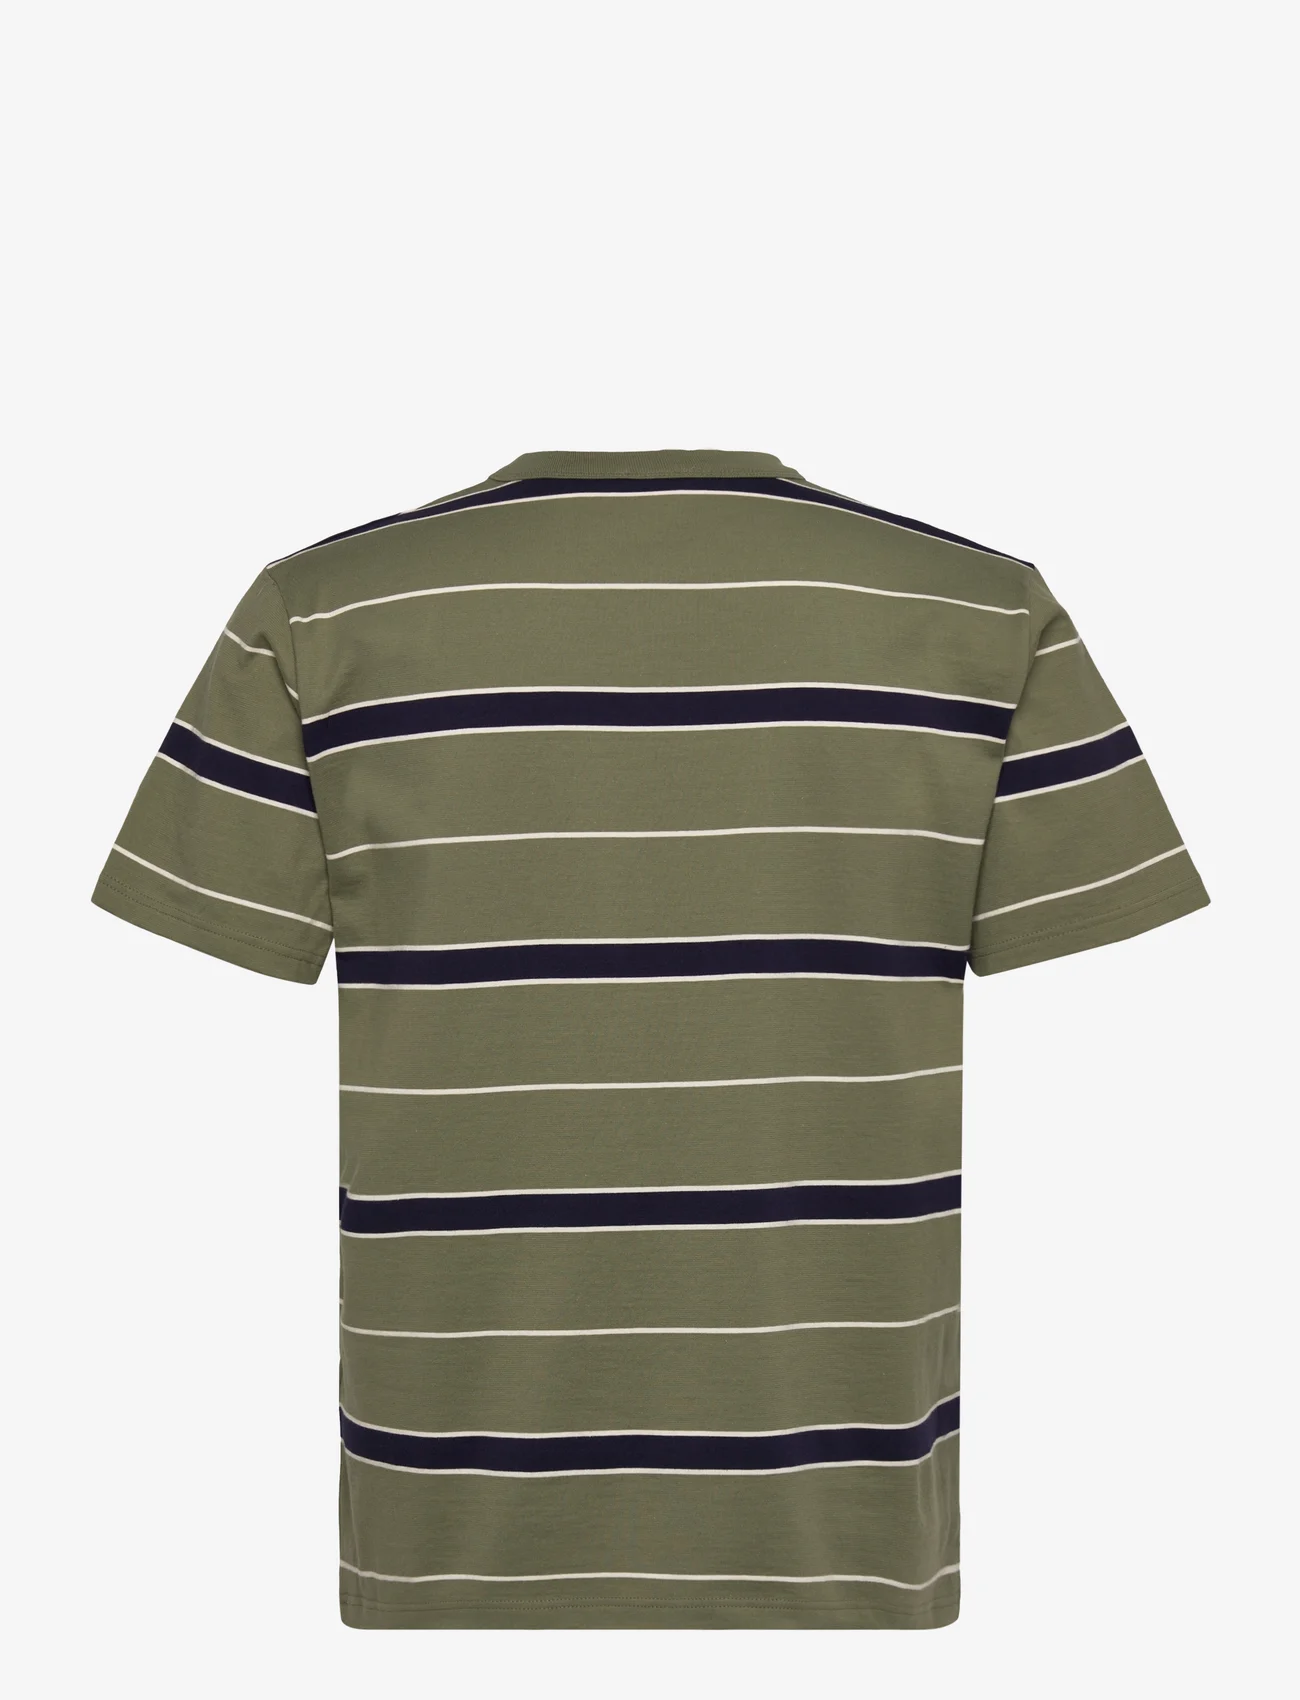 Armor Lux - T-shirt Héritage - kortermede t-skjorter - military/navire/nature - 1